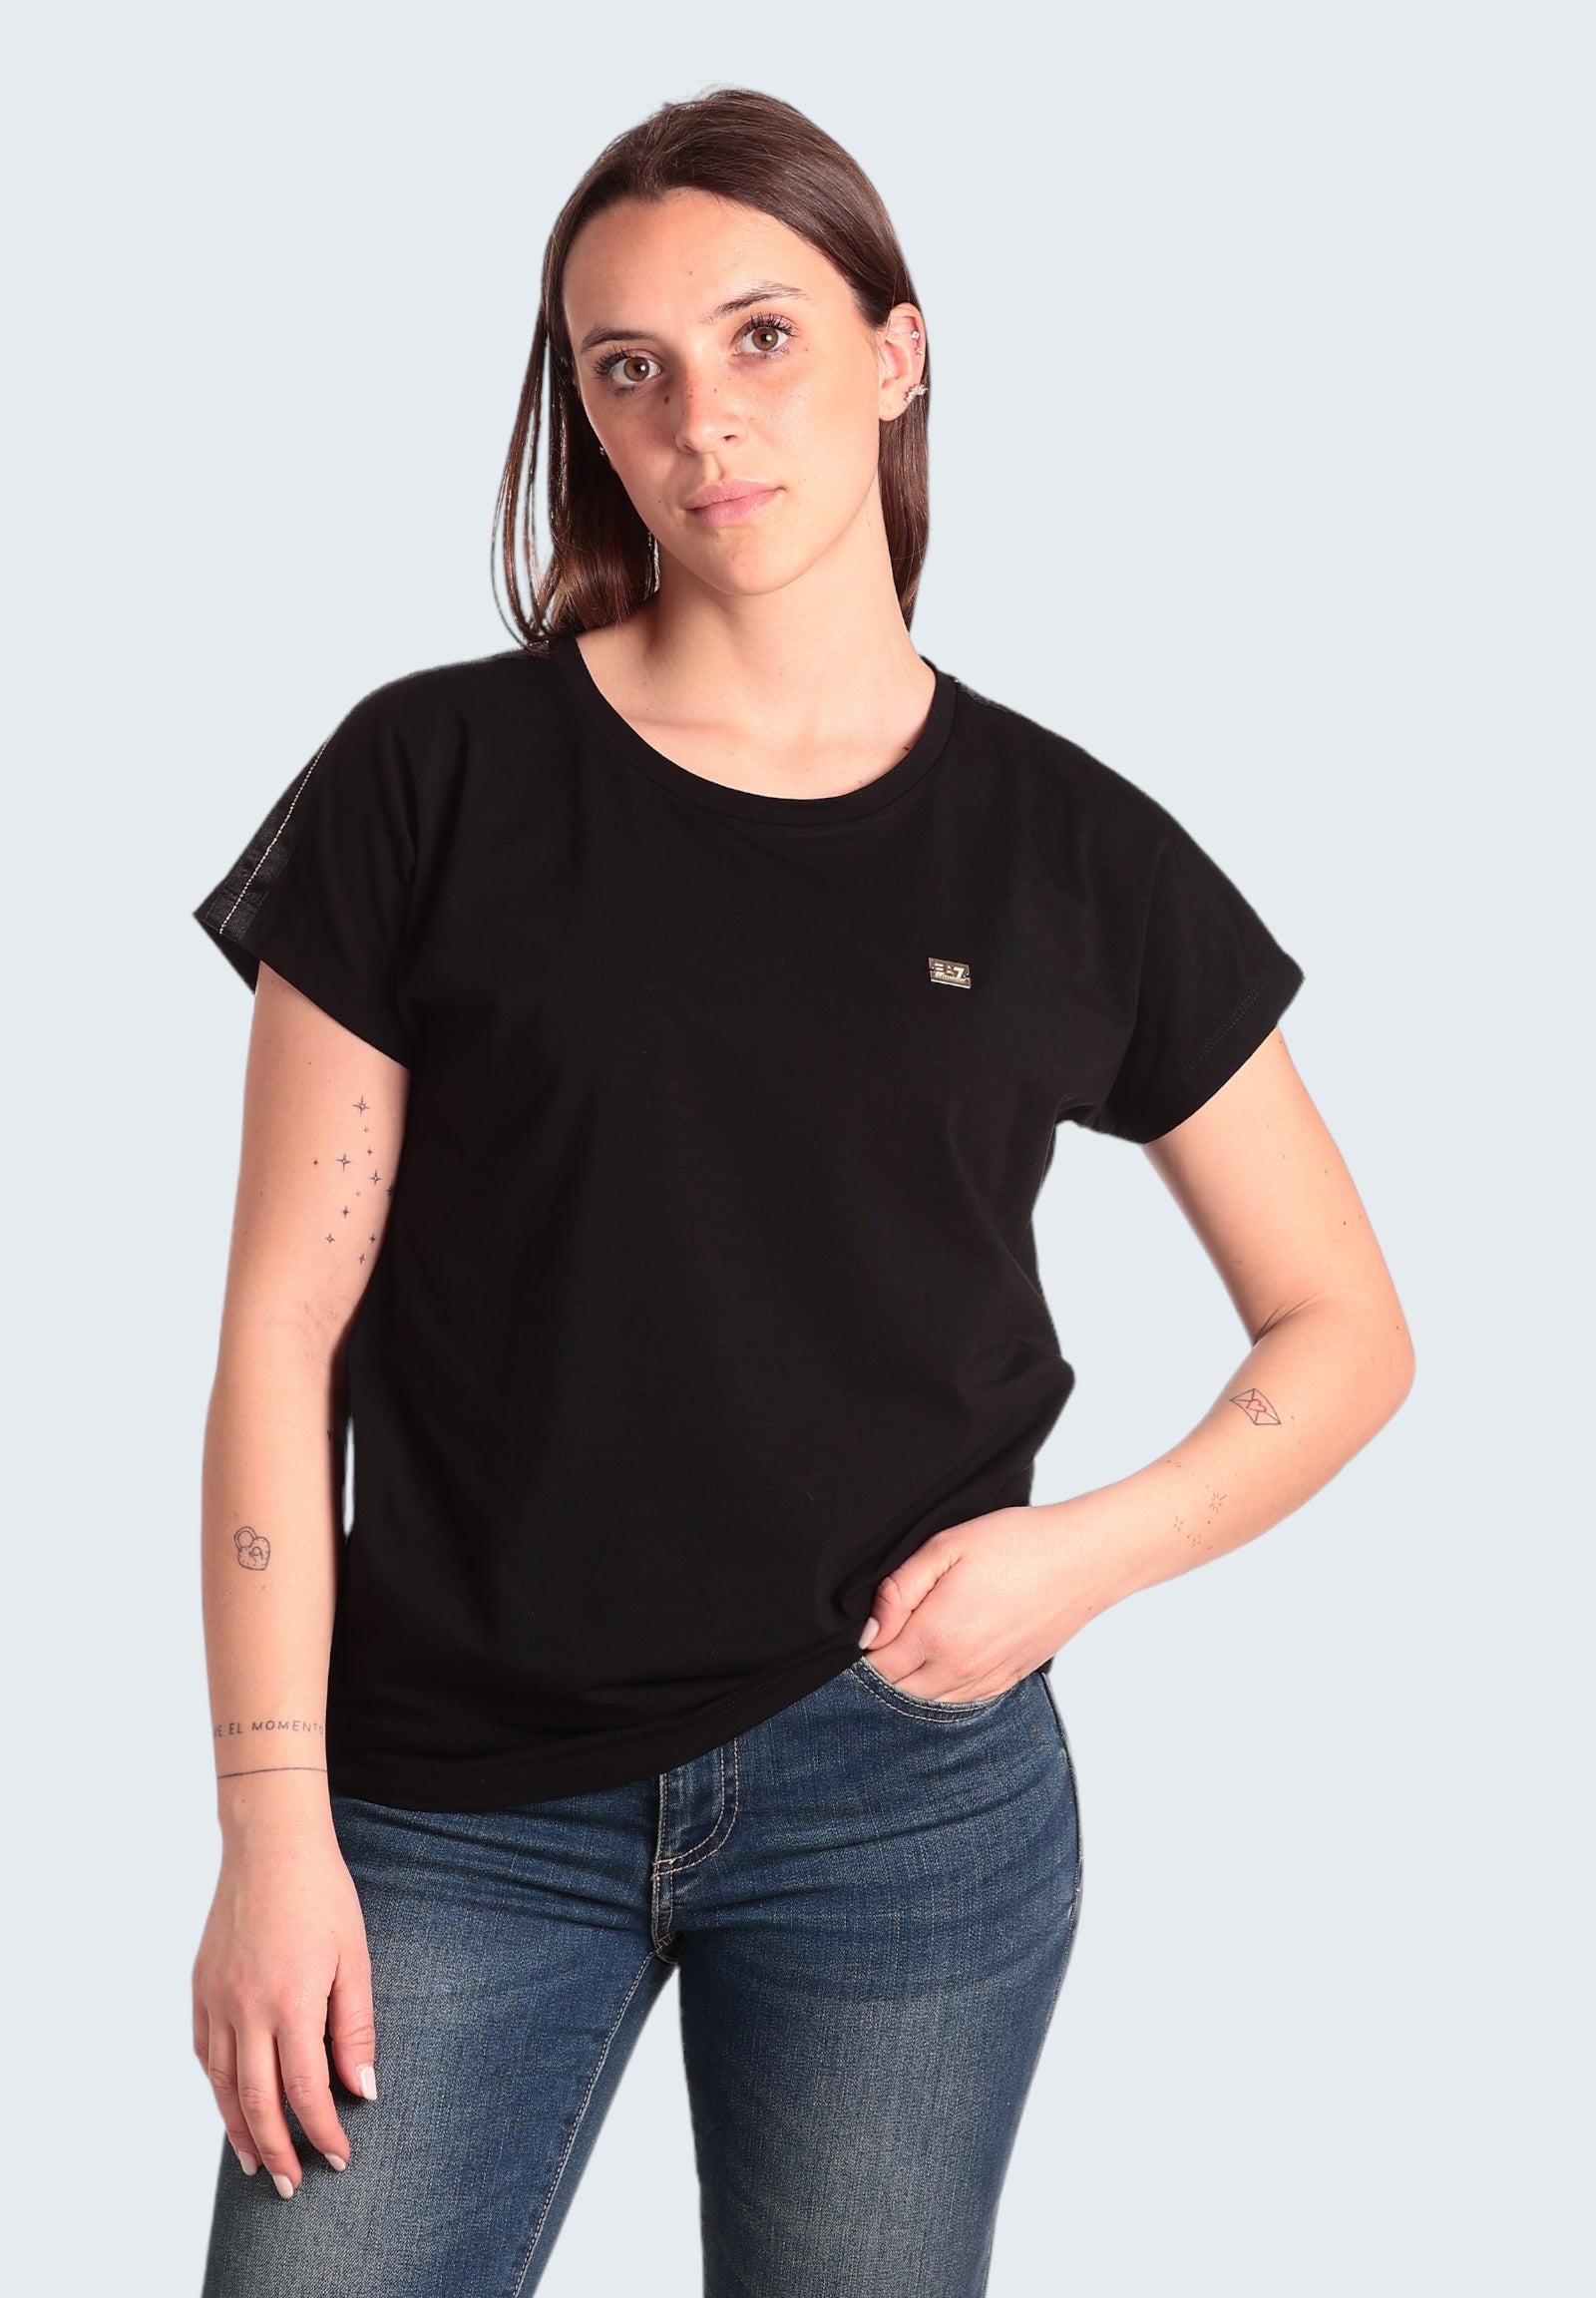 Ea7 Emporio Armani T-Shirt 3dtt41 Black